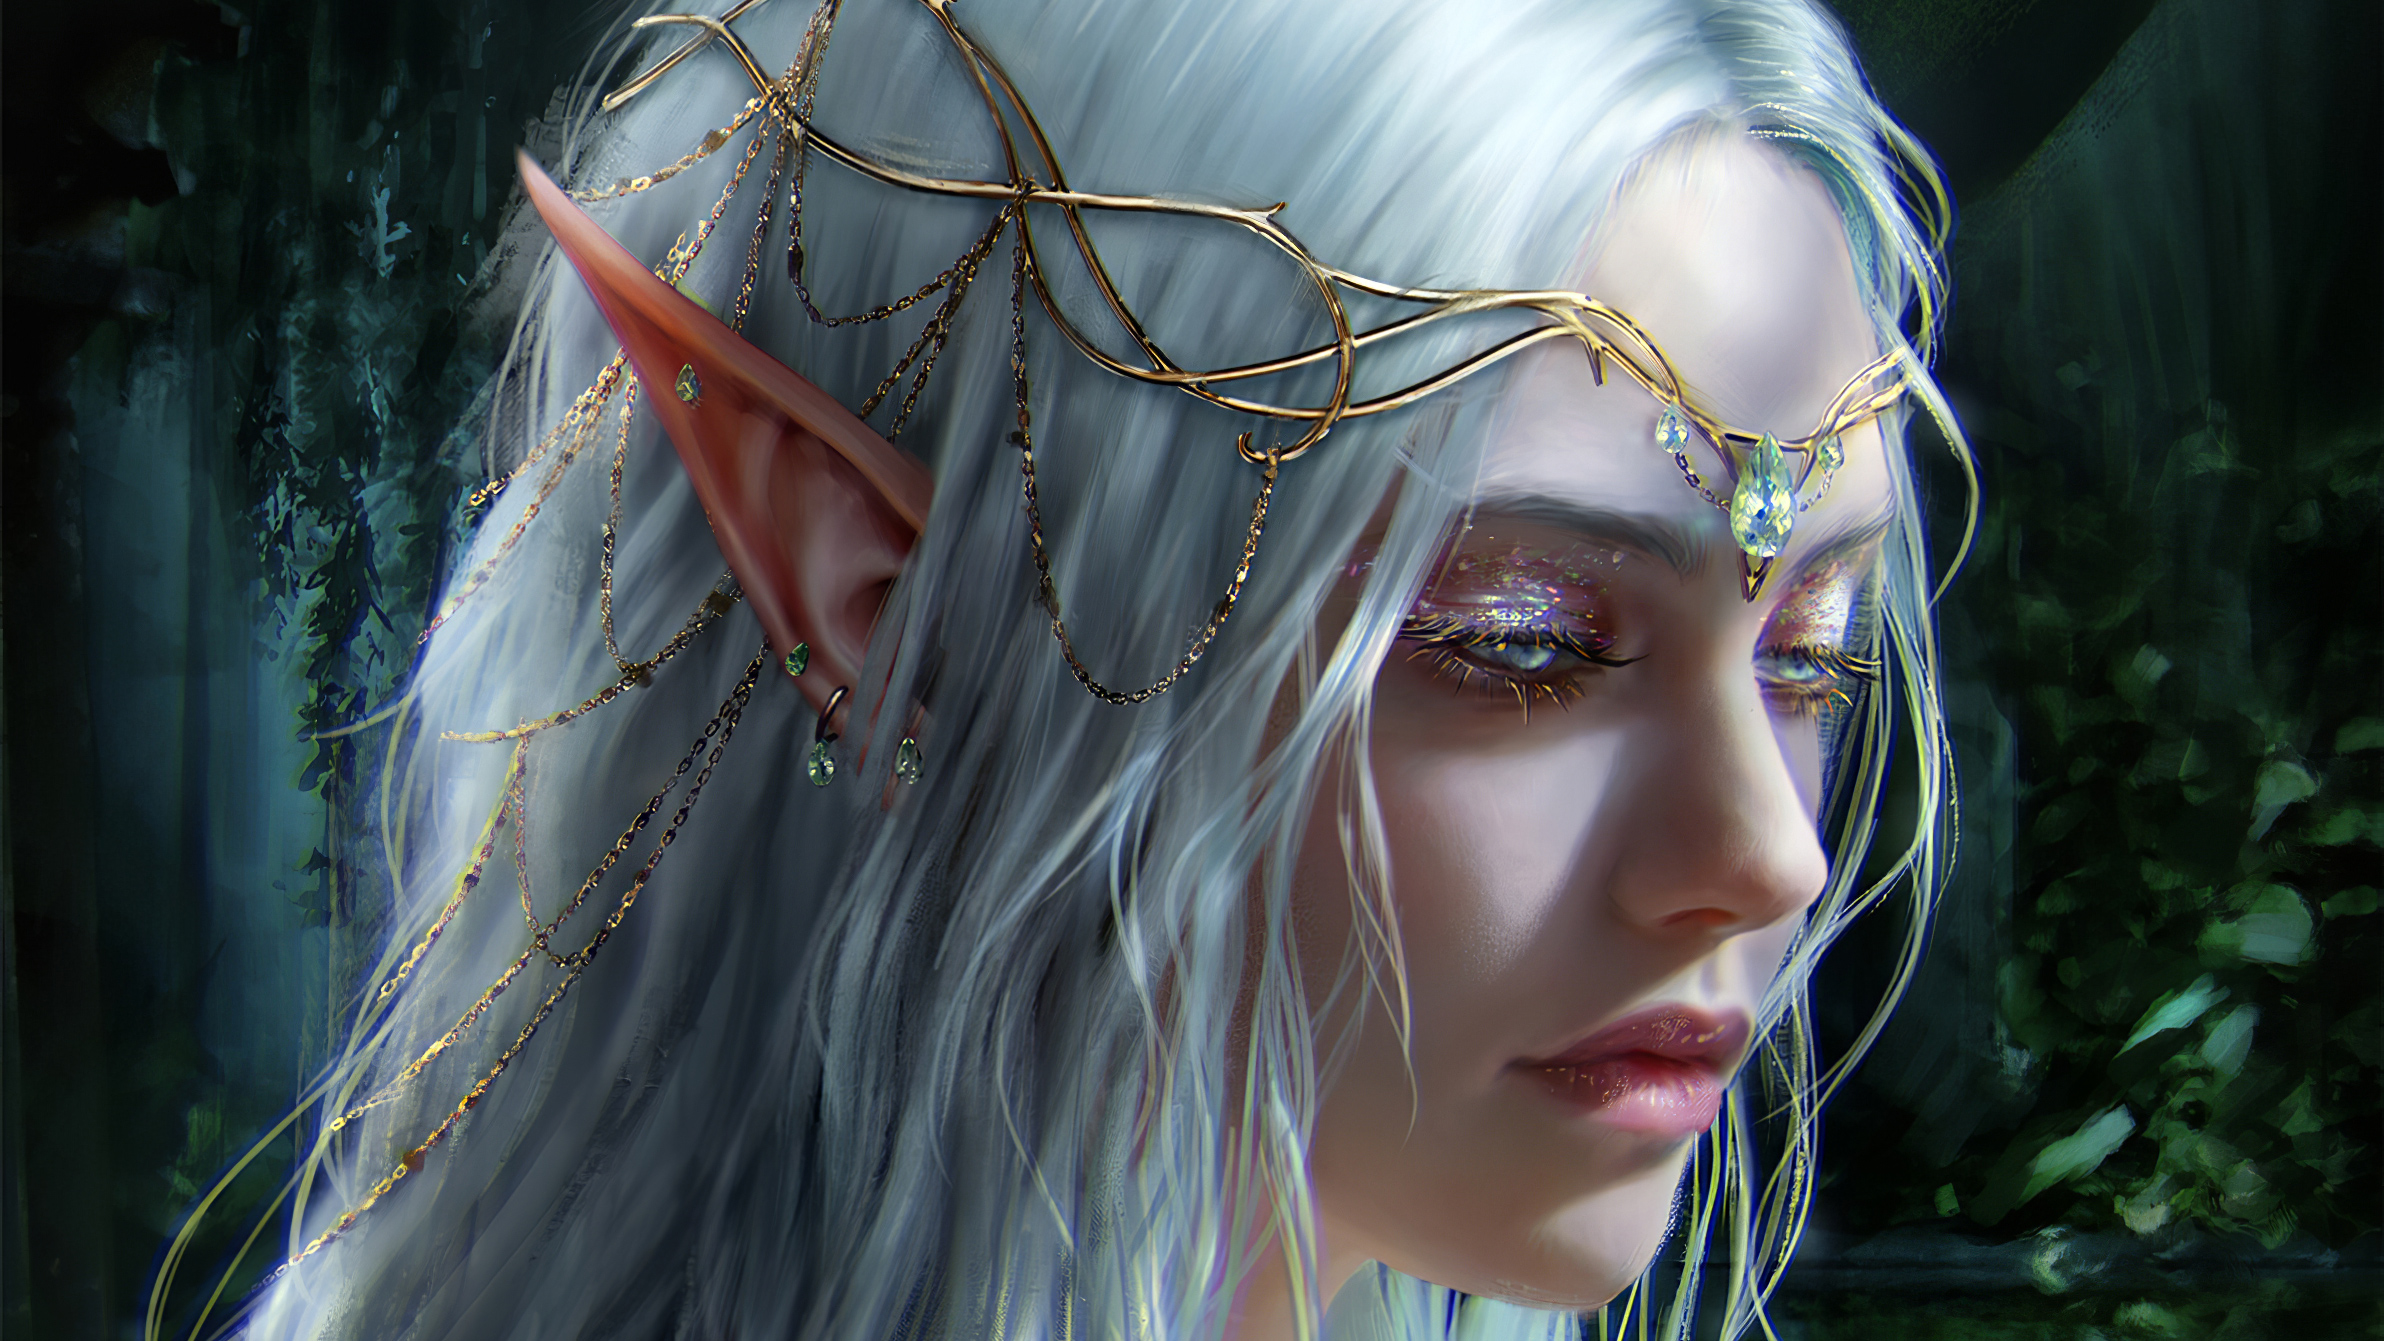 Blue-haired elf girl from "Sword Art Online" - wide 4